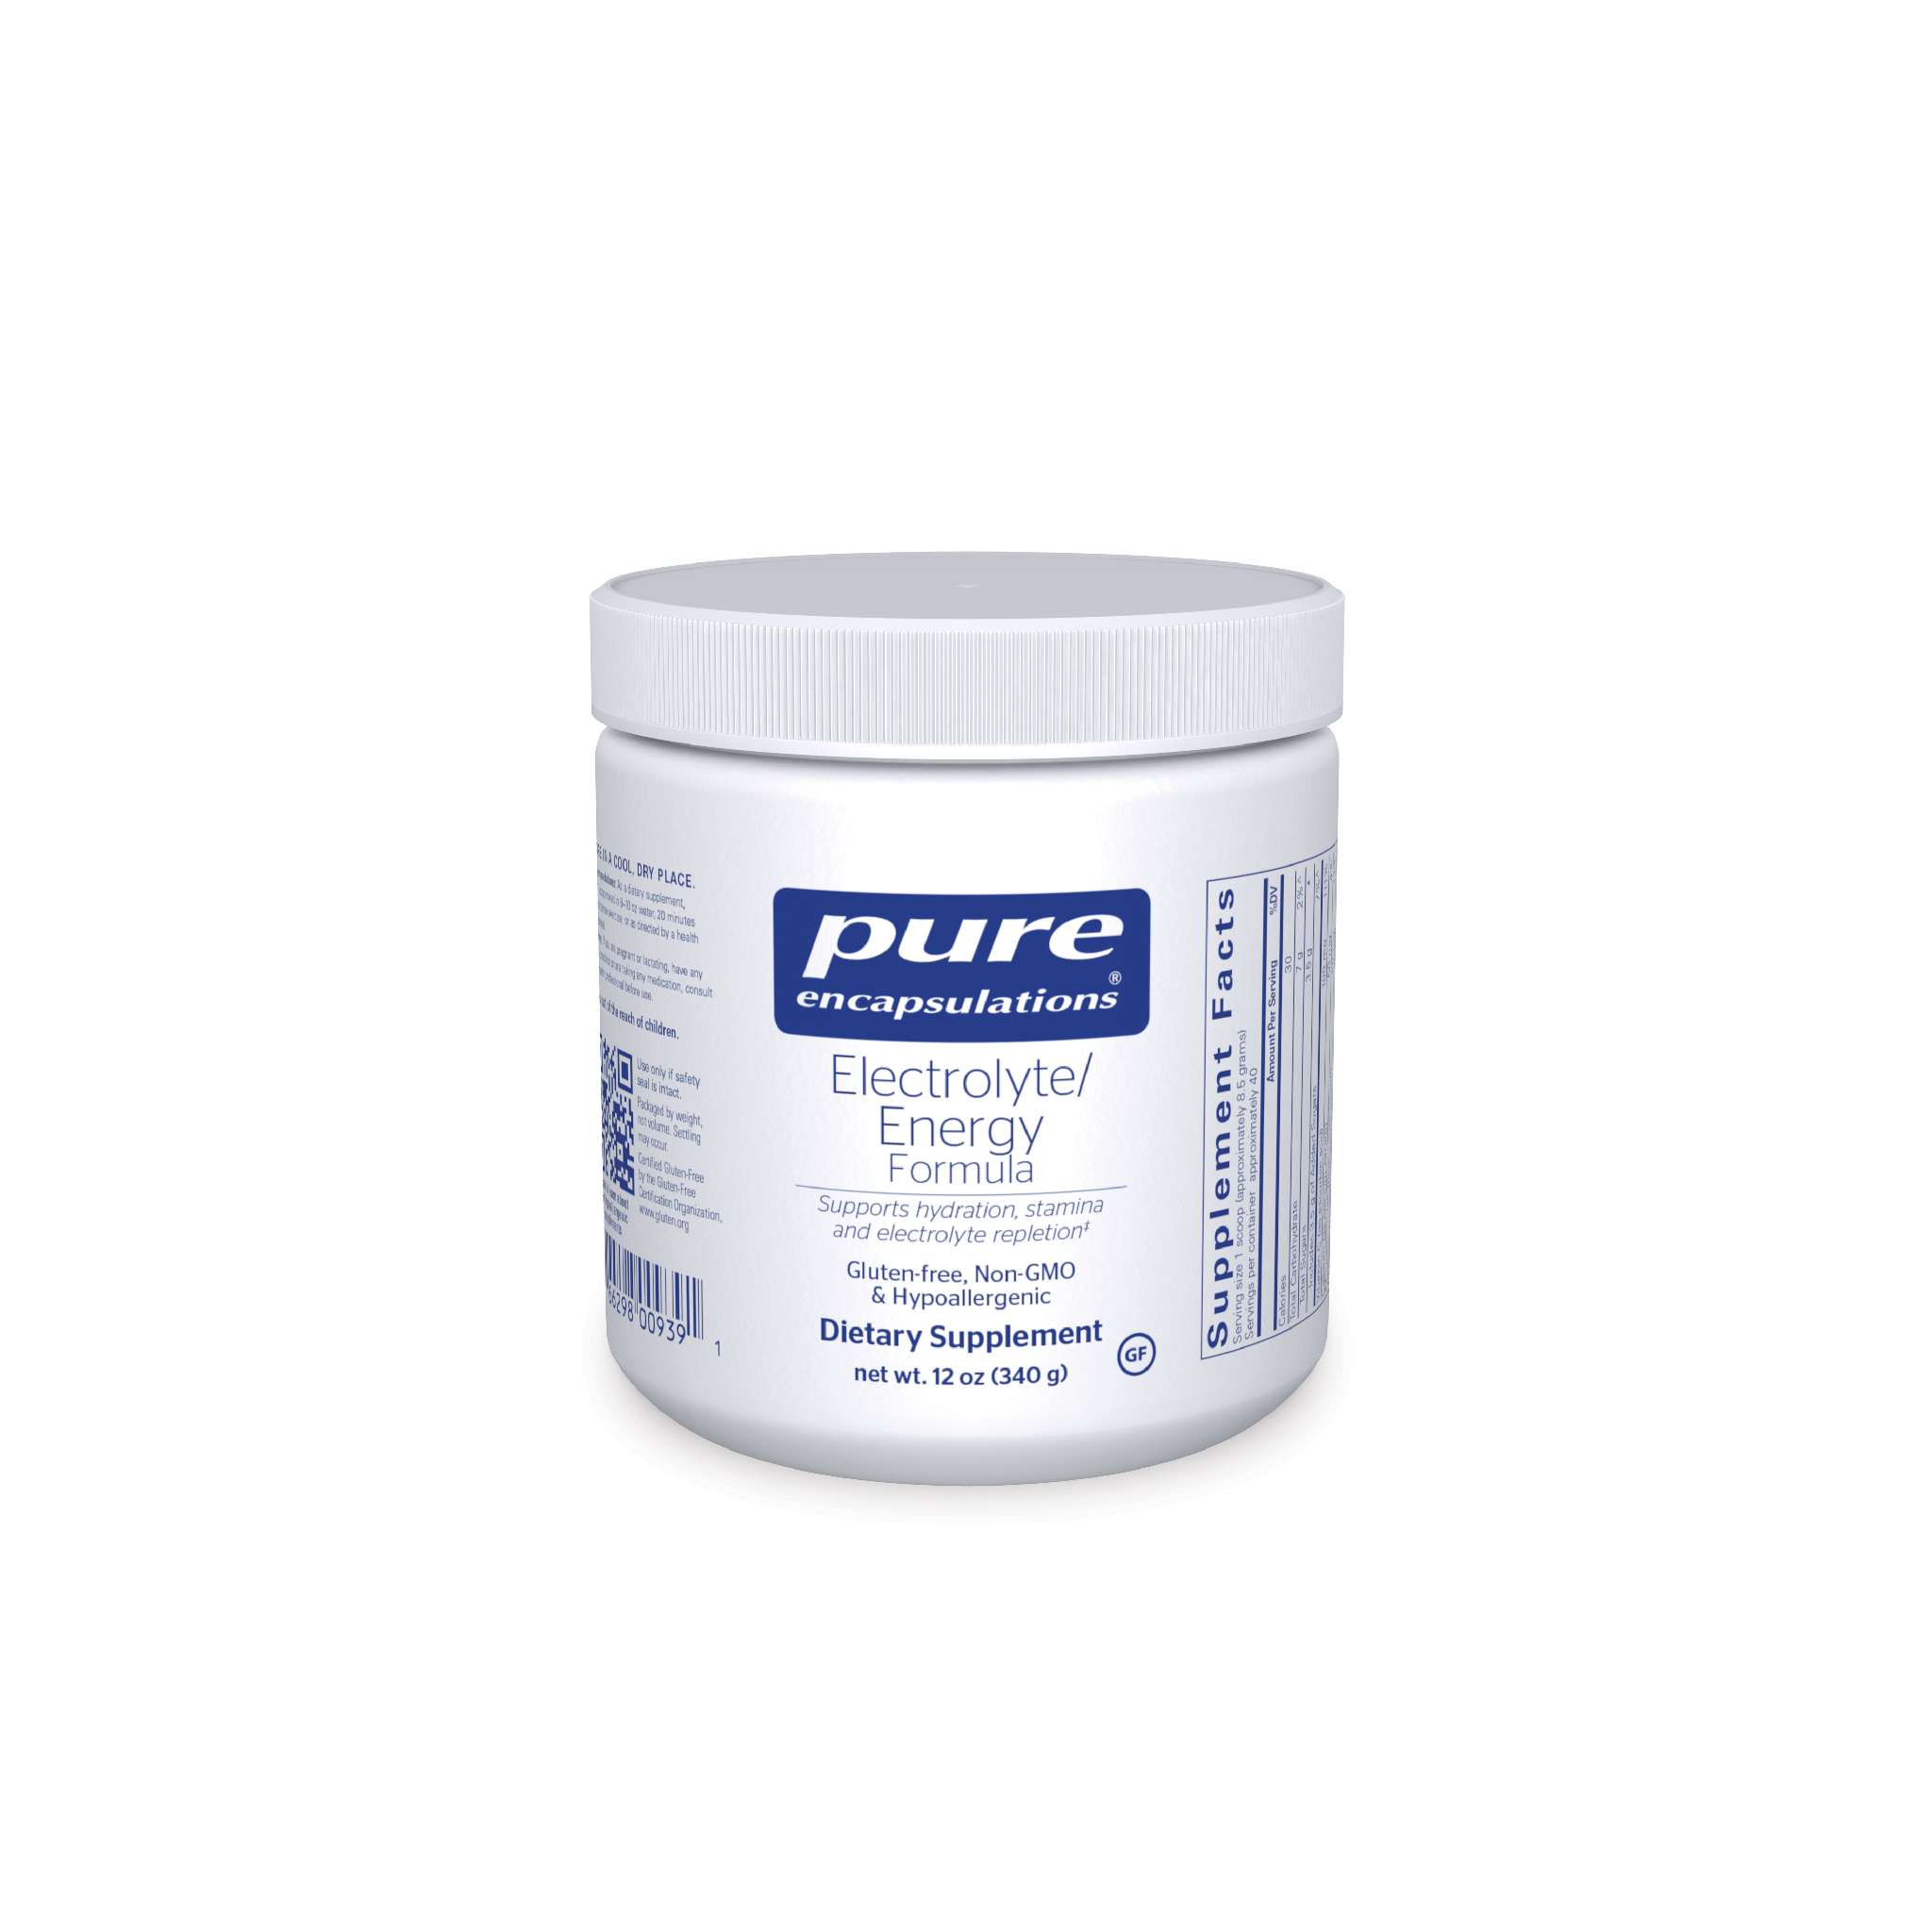 Pure Encapsulations - Electrolyte/Energy Formula powder